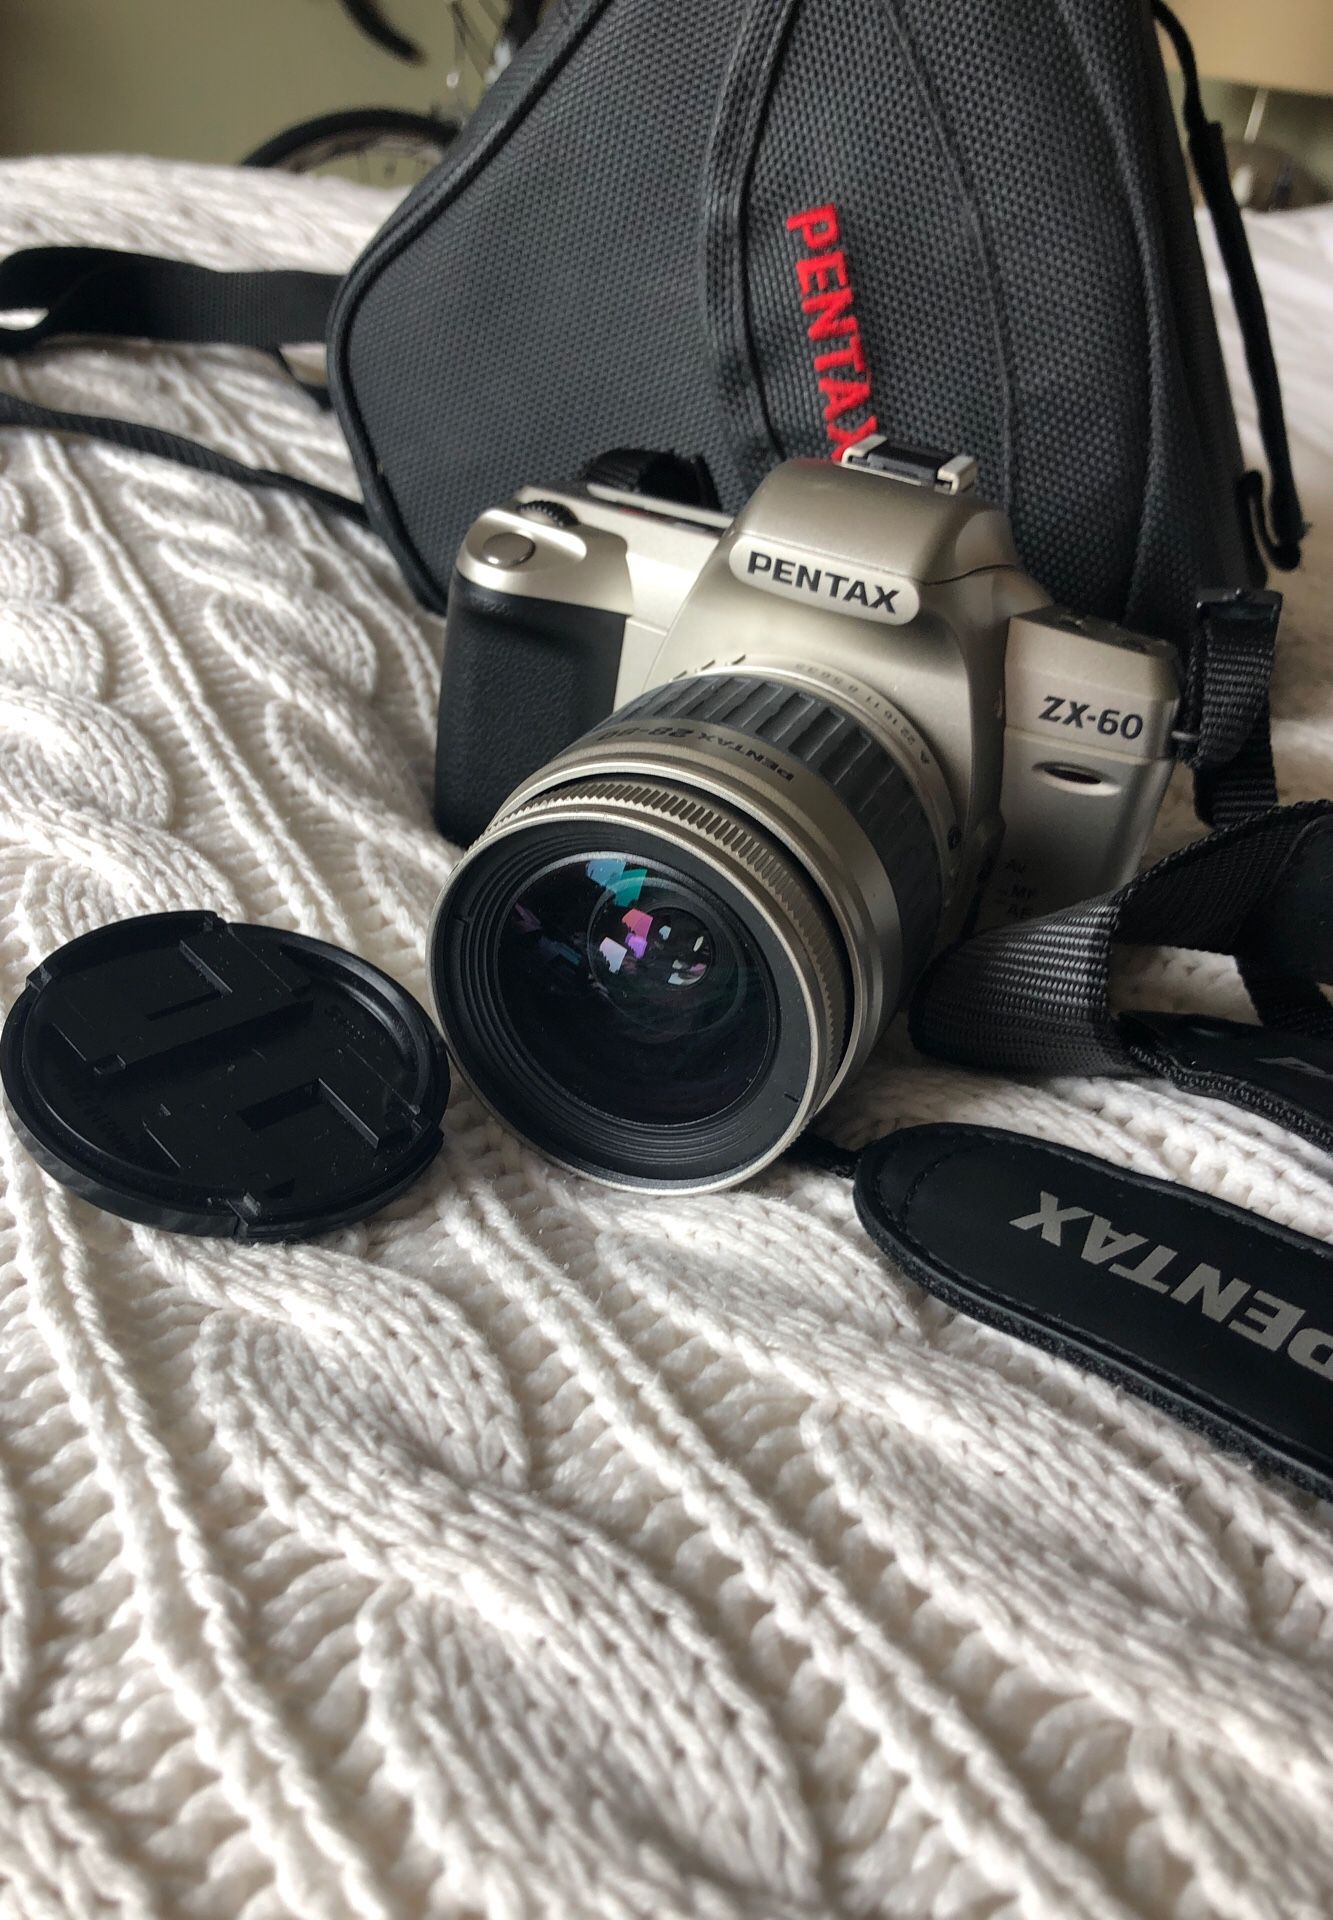 Pentax Film Camera with Case